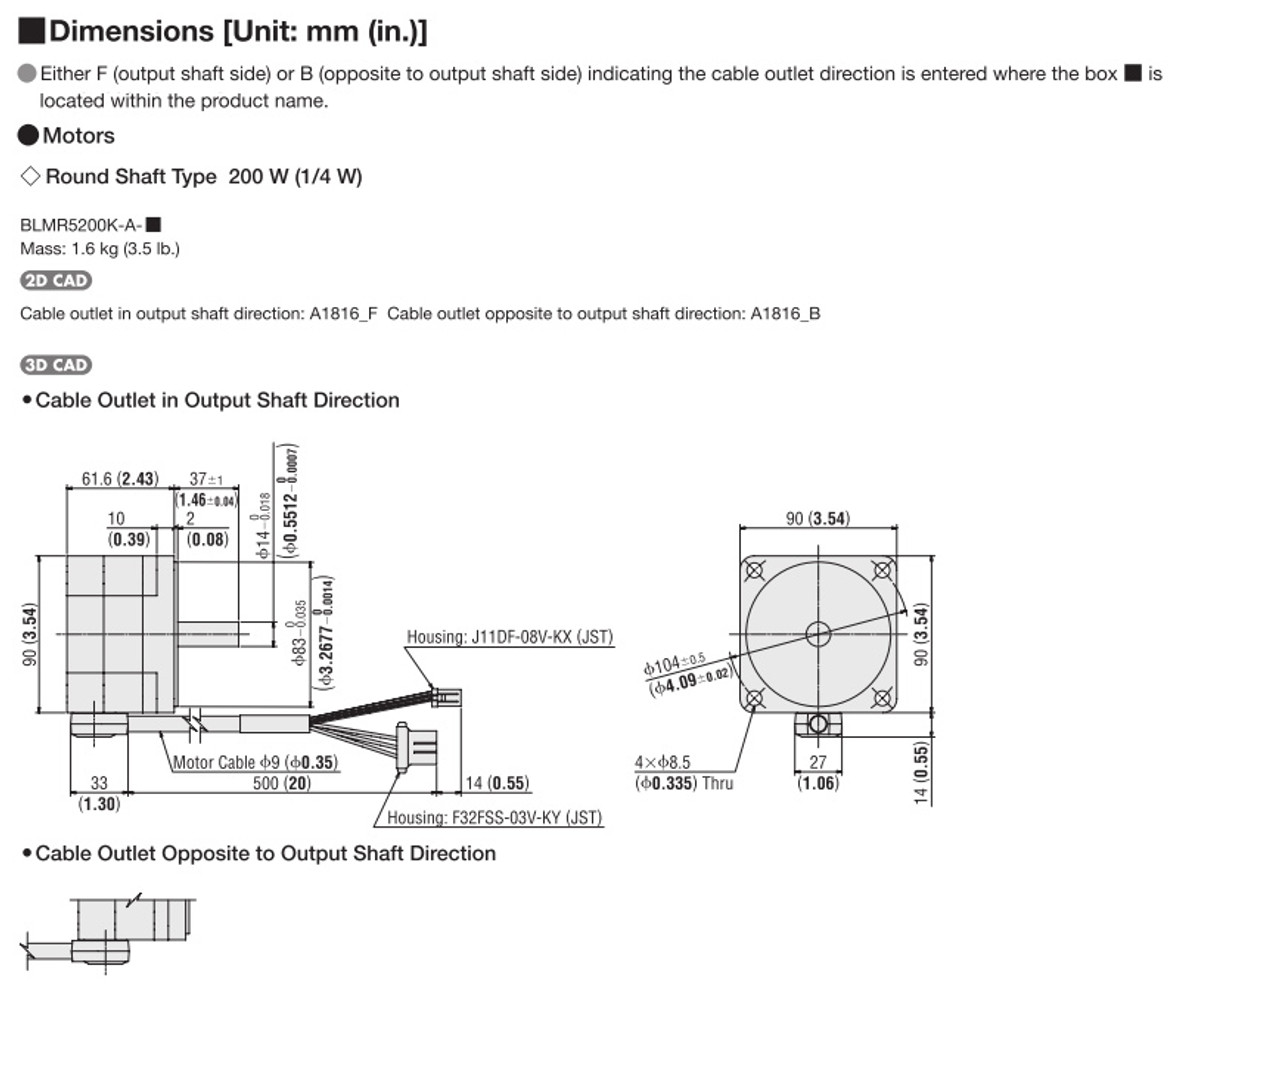 BLMR5200K-A-B / BLVD-KRD - Dimensions